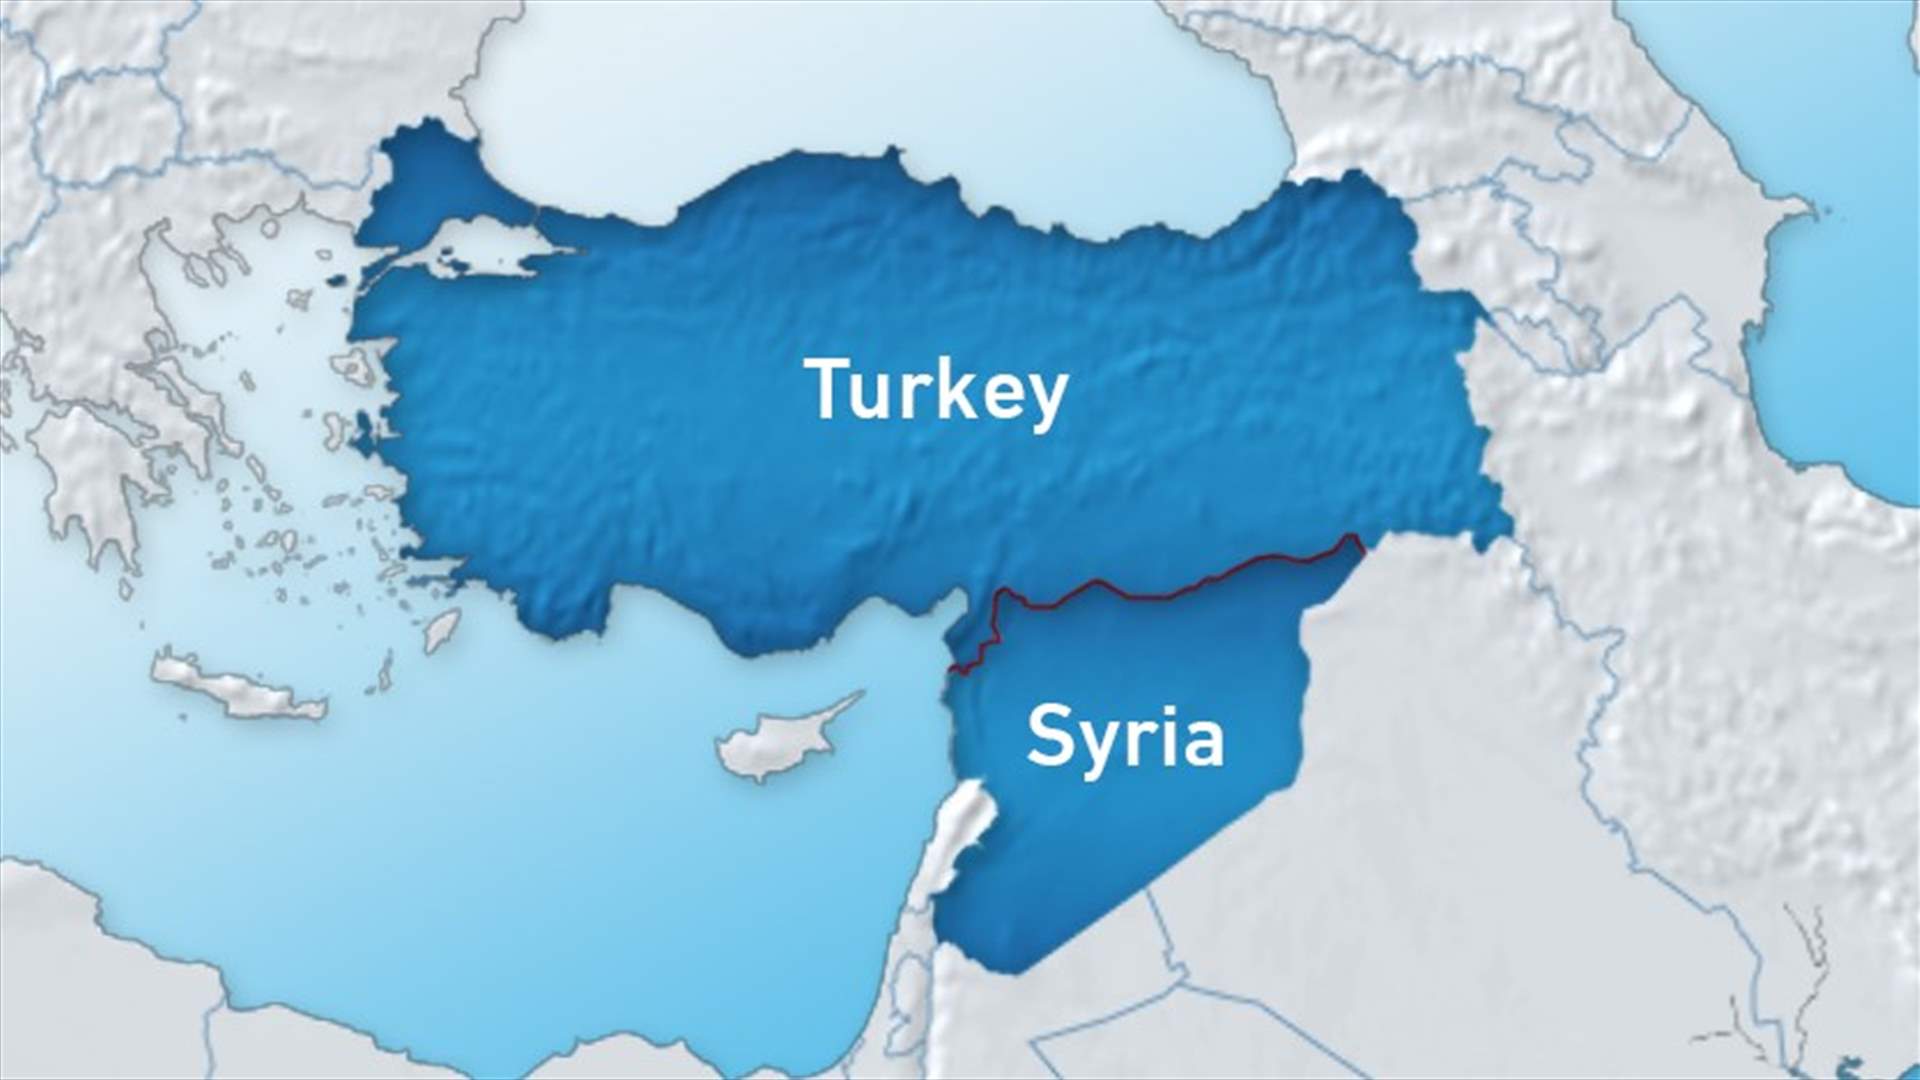 Turkish warplanes hit Islamic State, Kurdish militia sites in Syria - sources